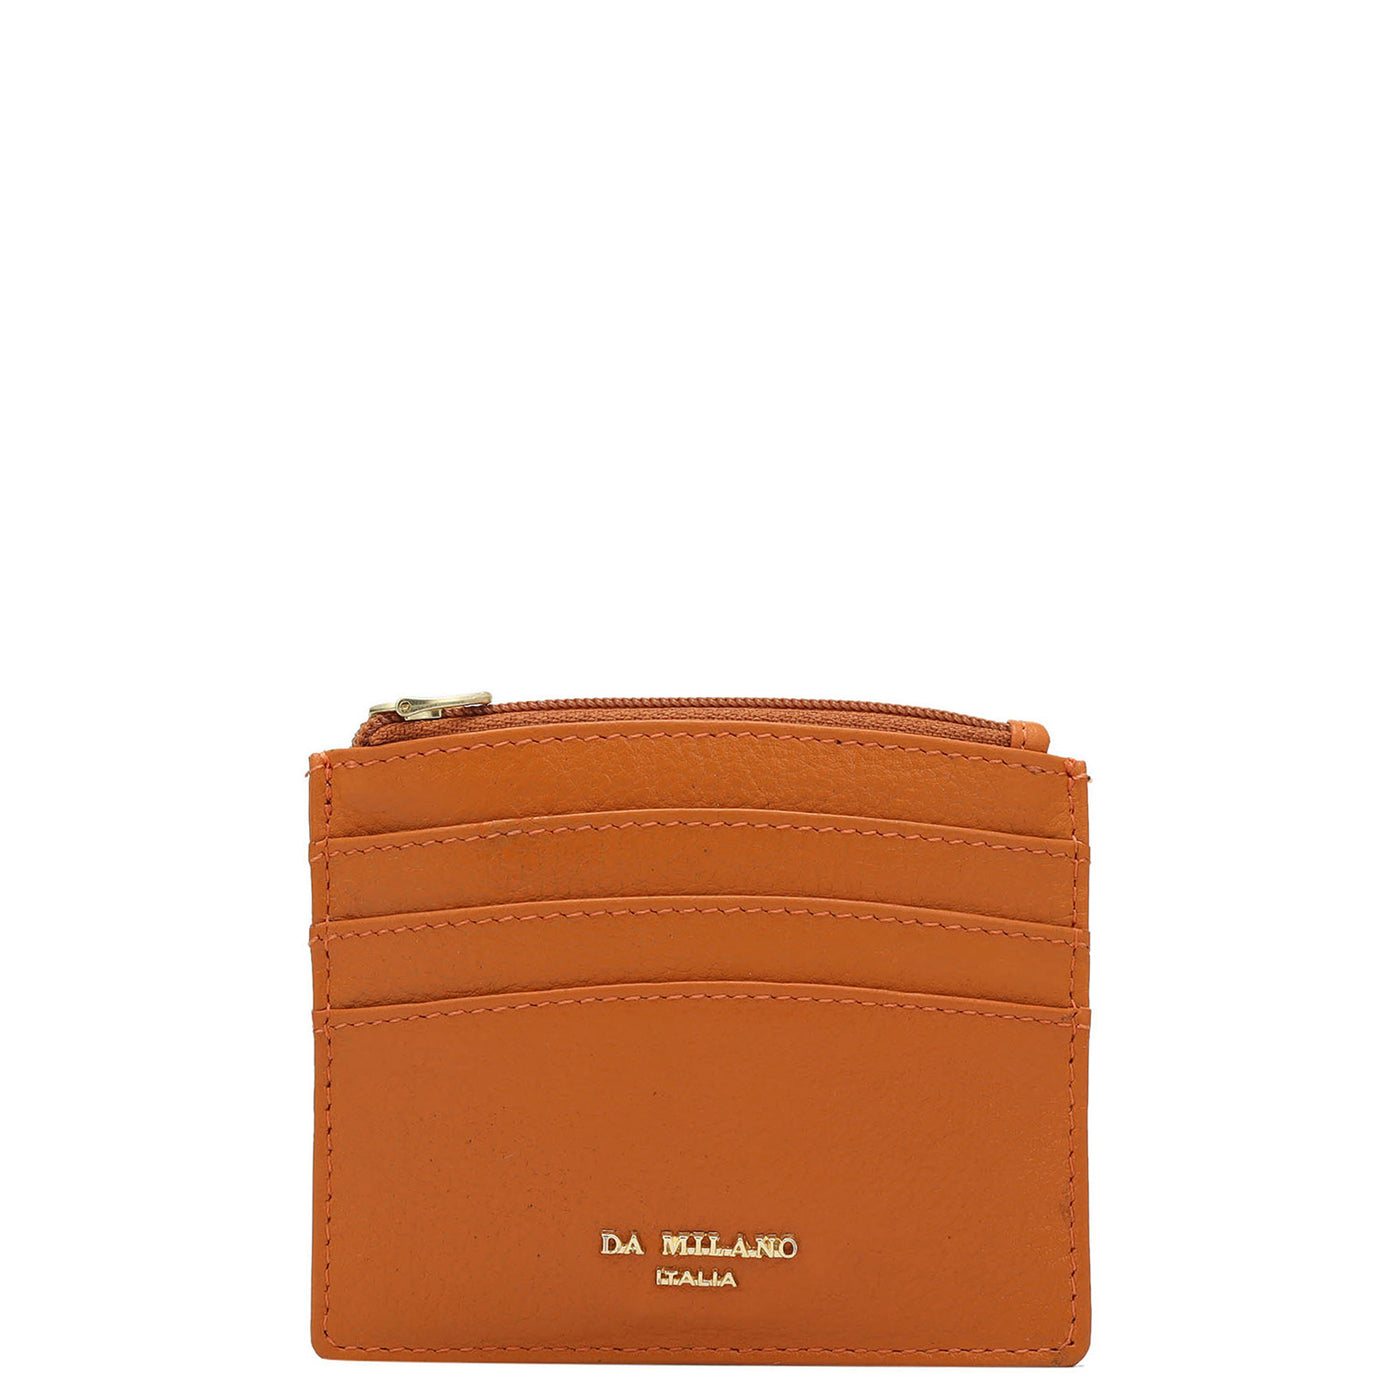 Wax Leather Card Case - Orange